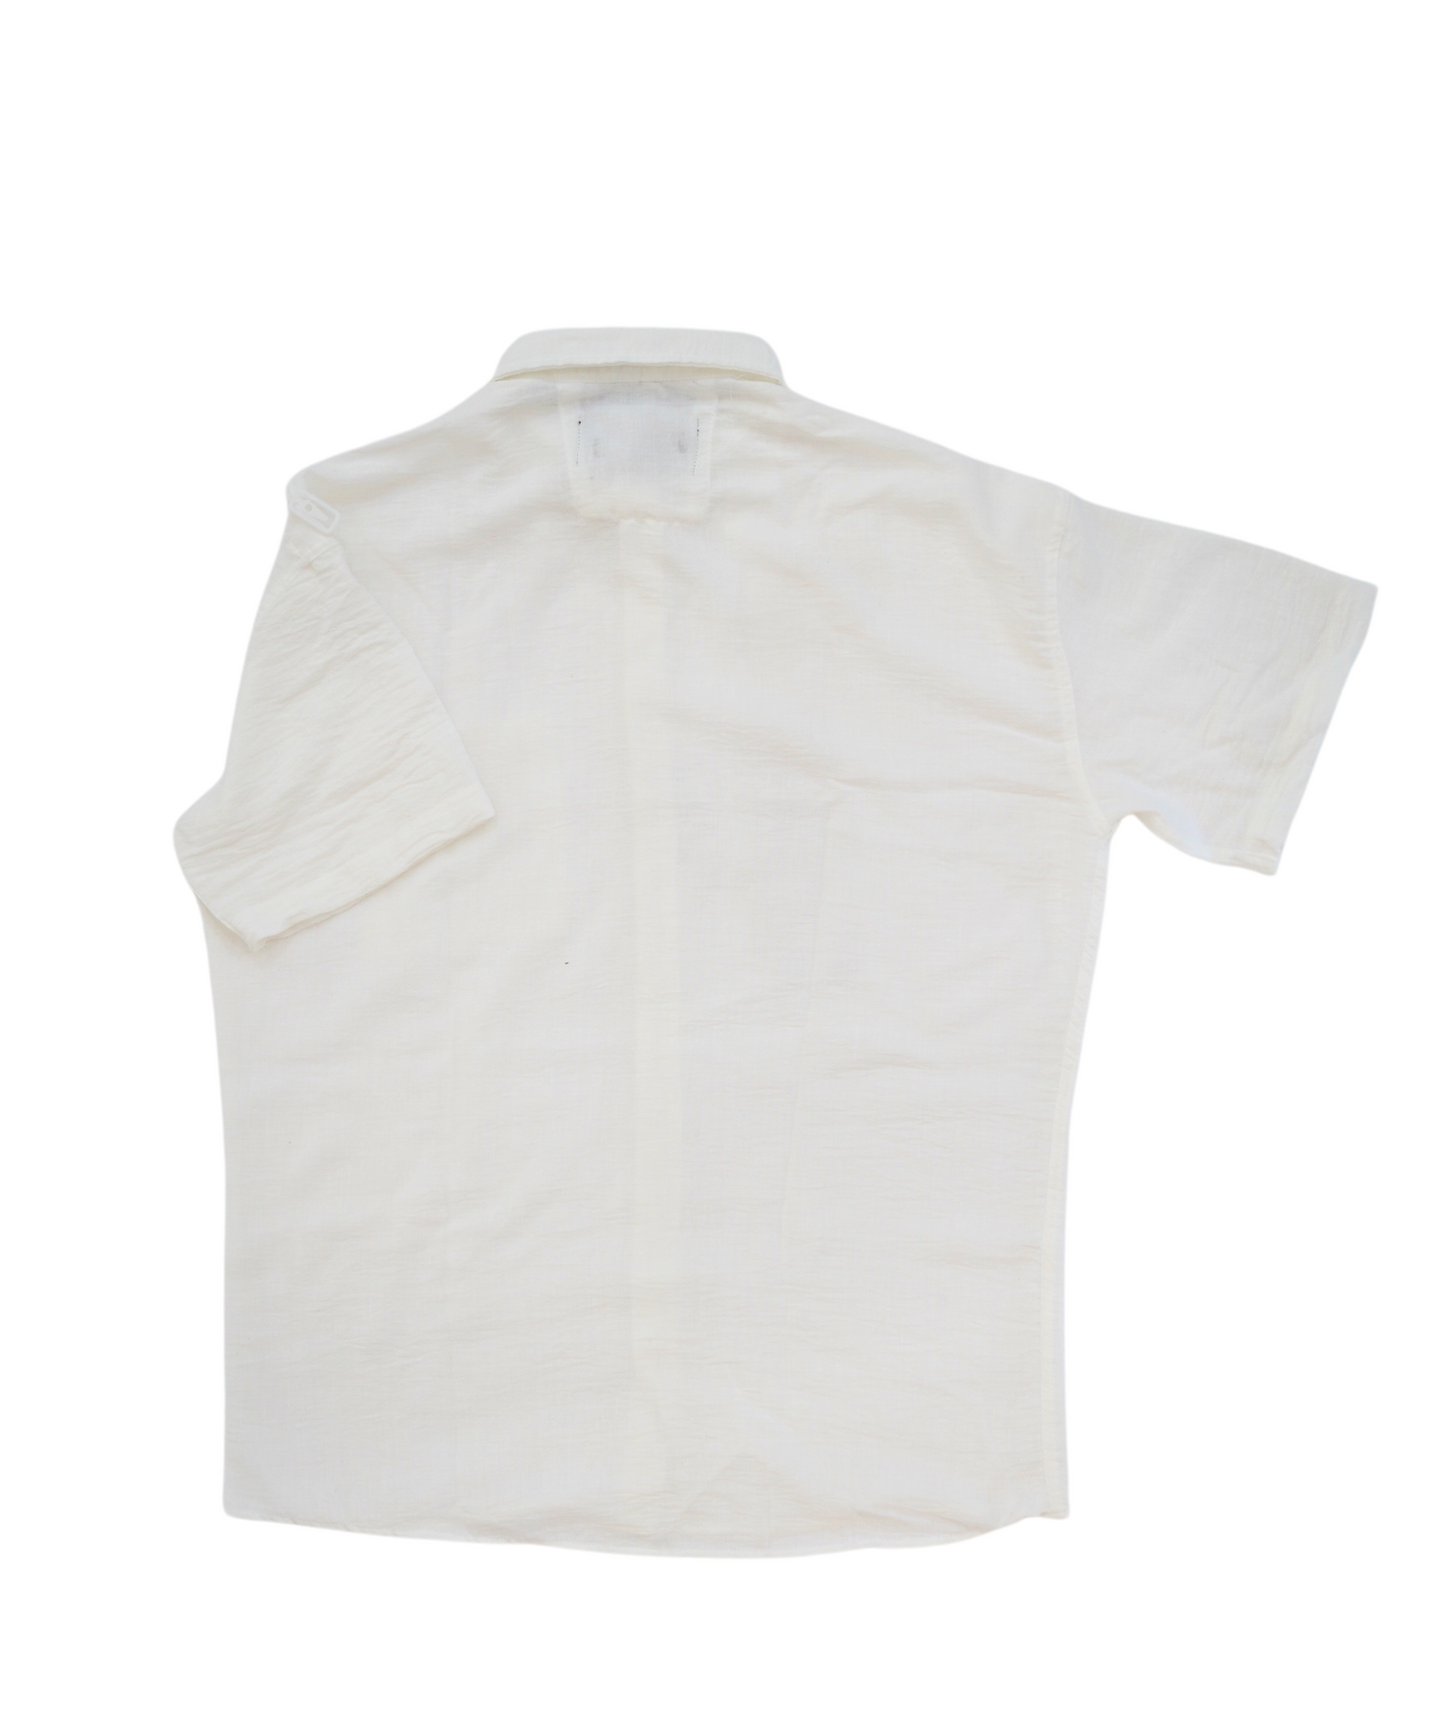 Artchimia dressy resort shirt